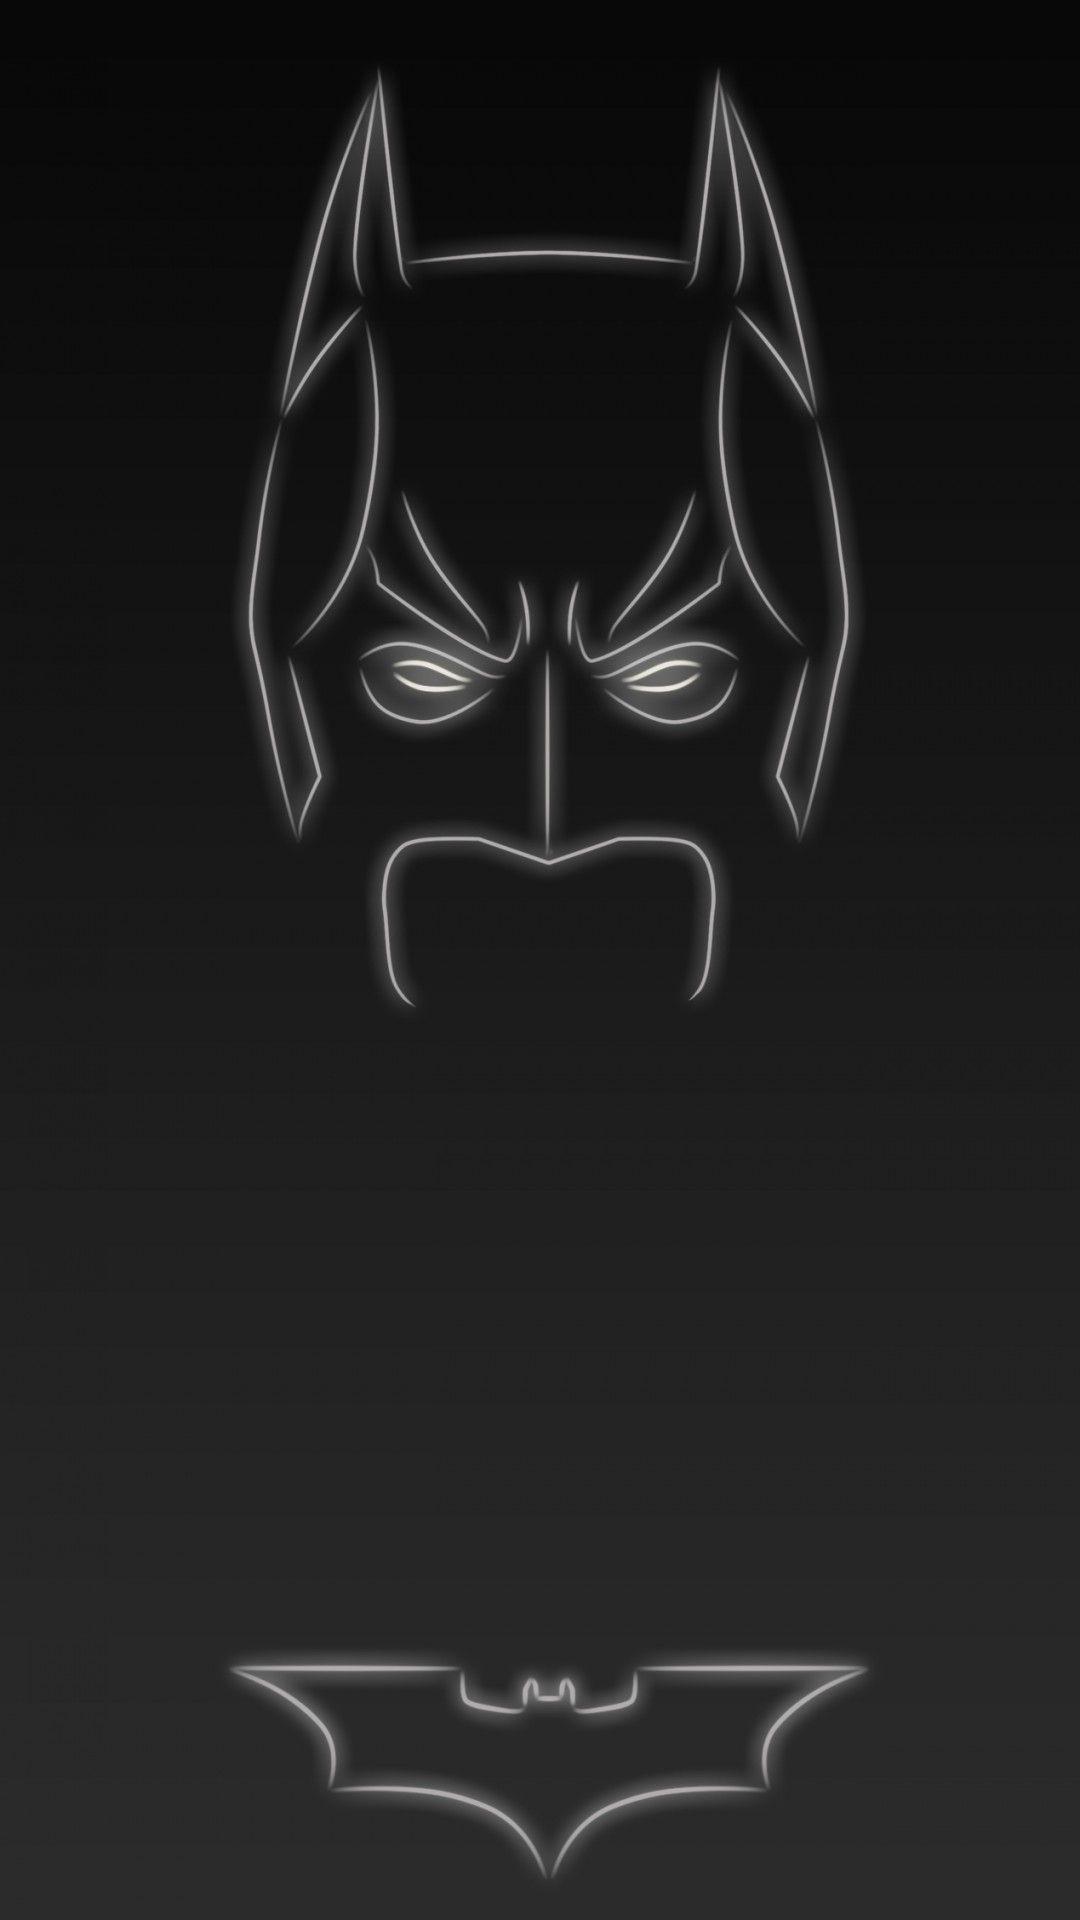 Neon Light Dark Knight Superhero Batman. Batman, Superhero, Superhero wallpaper